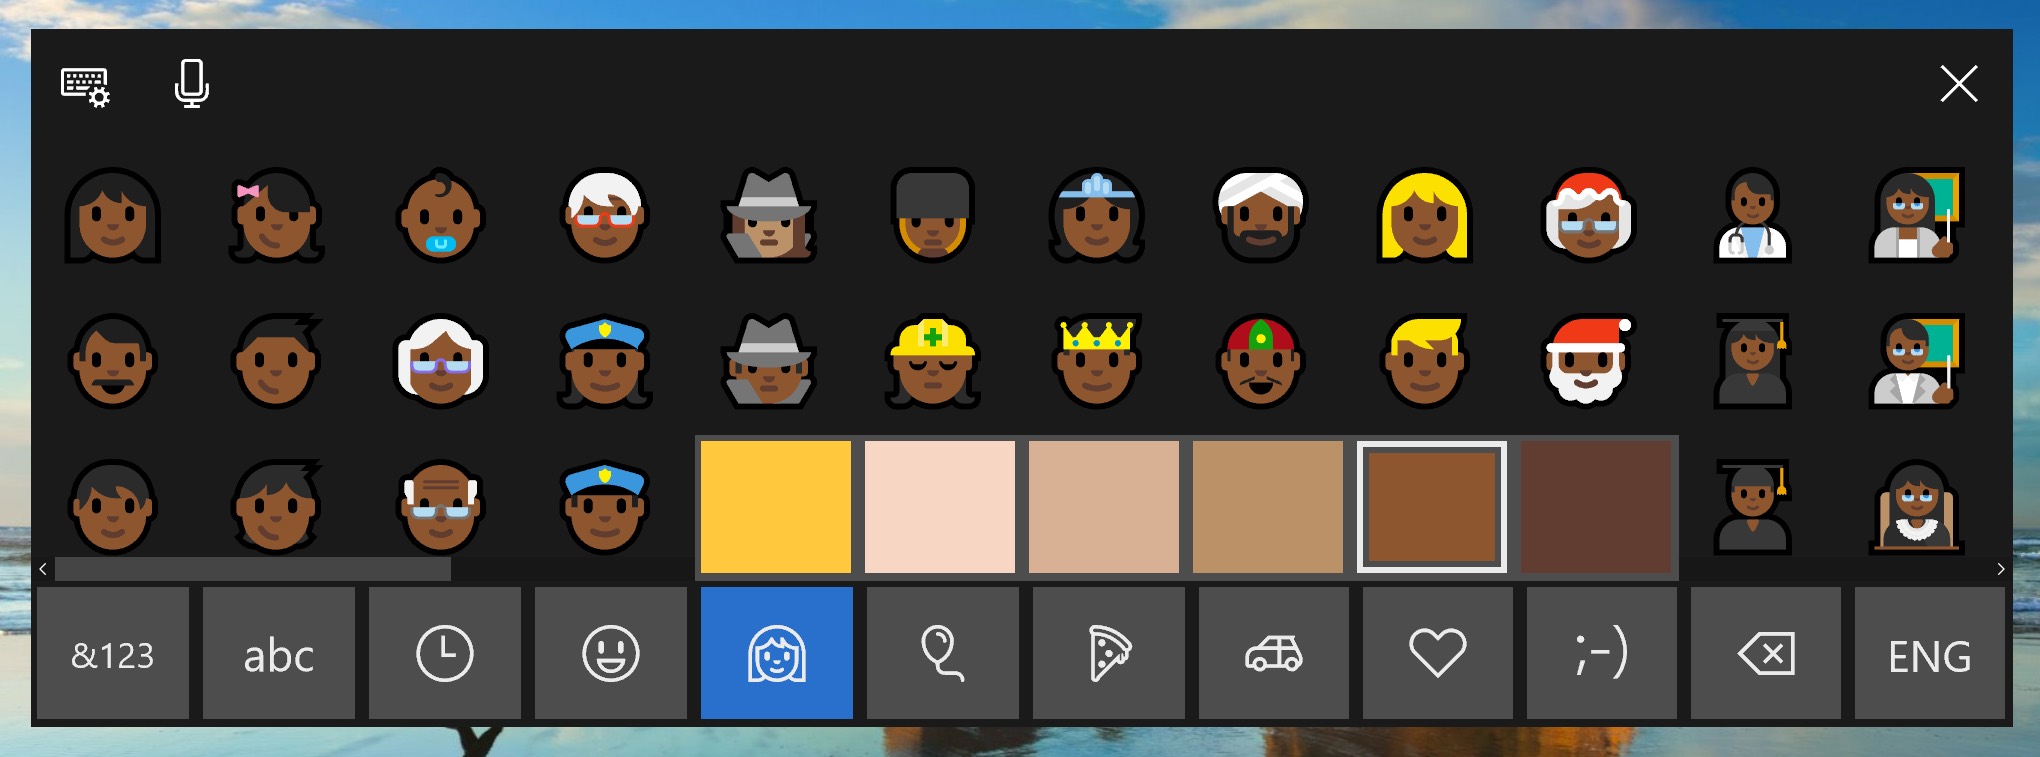 windows-10-emoji-keyboard